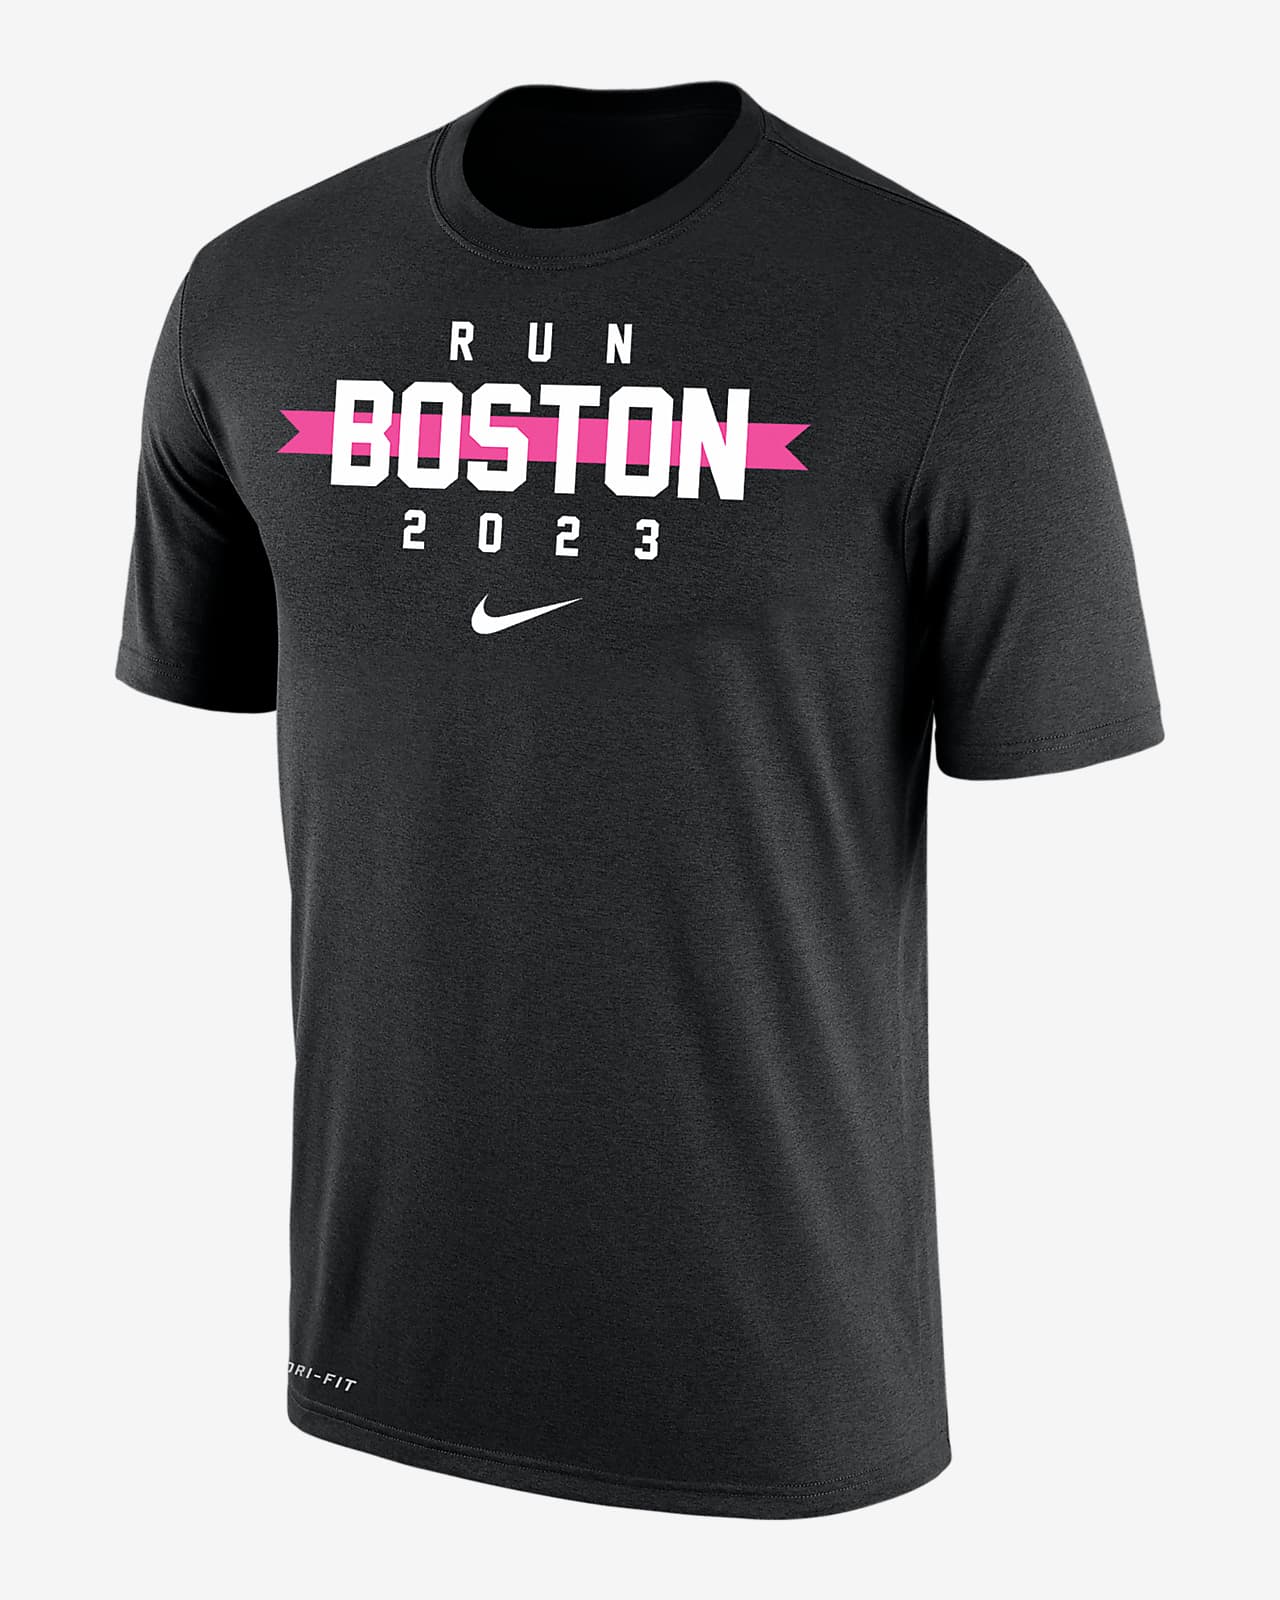 Nike Dri-FIT Men's Running T-Shirt